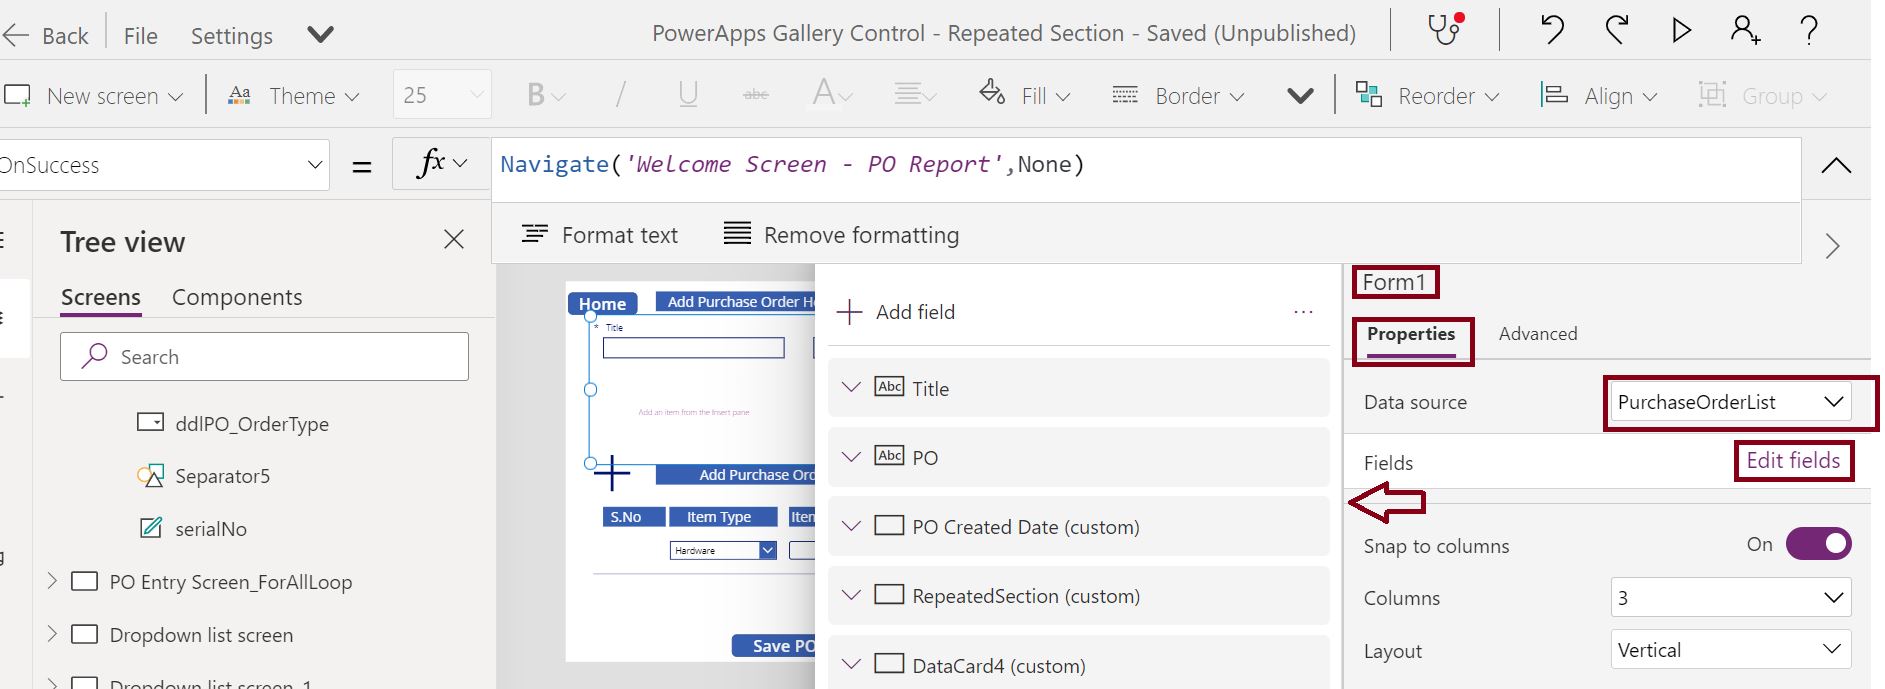 Edit fields in PowerApps form control